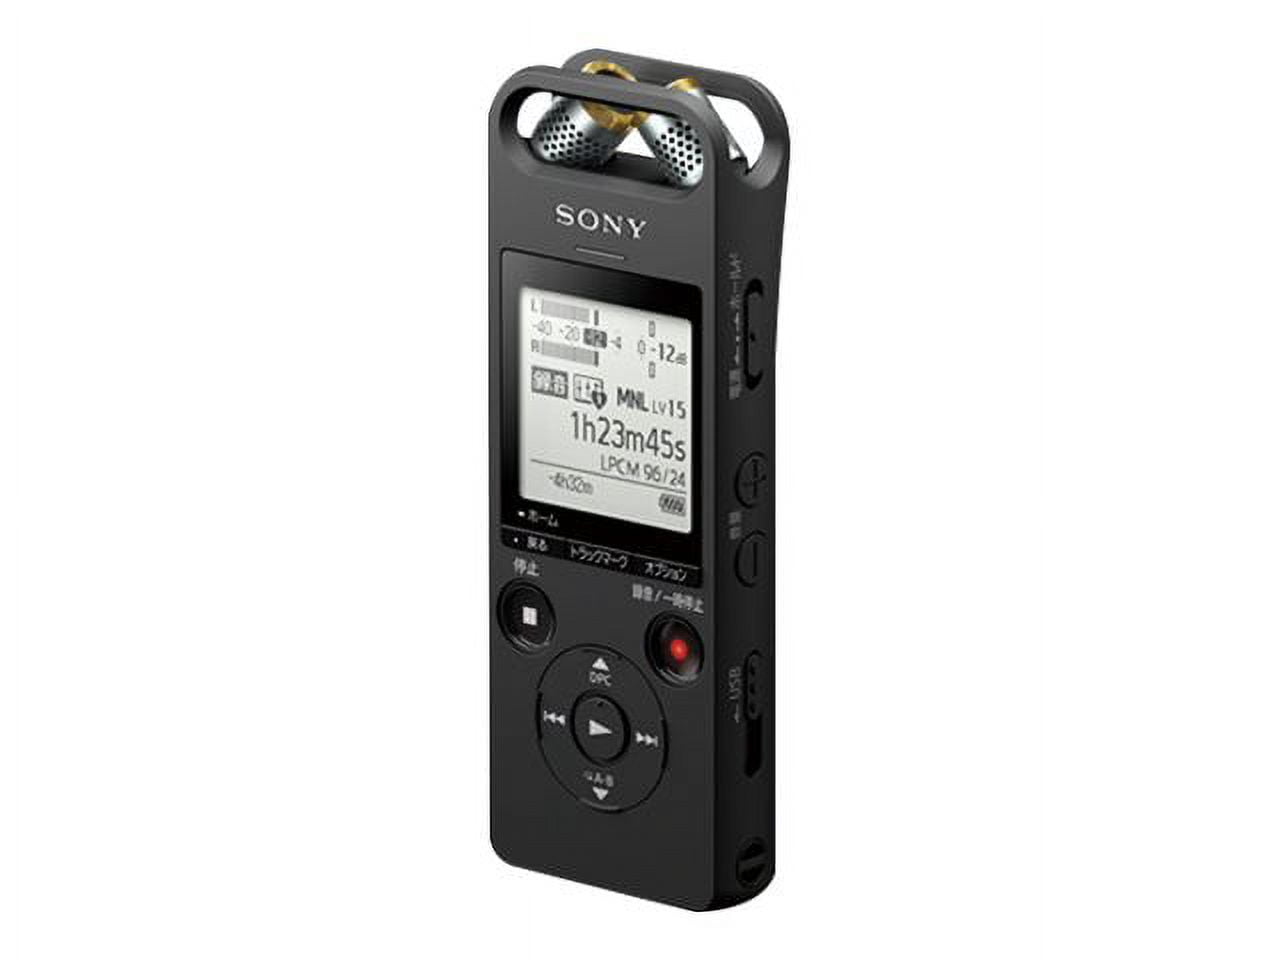 Sony GB Digital Voice Recorder, ICD SX